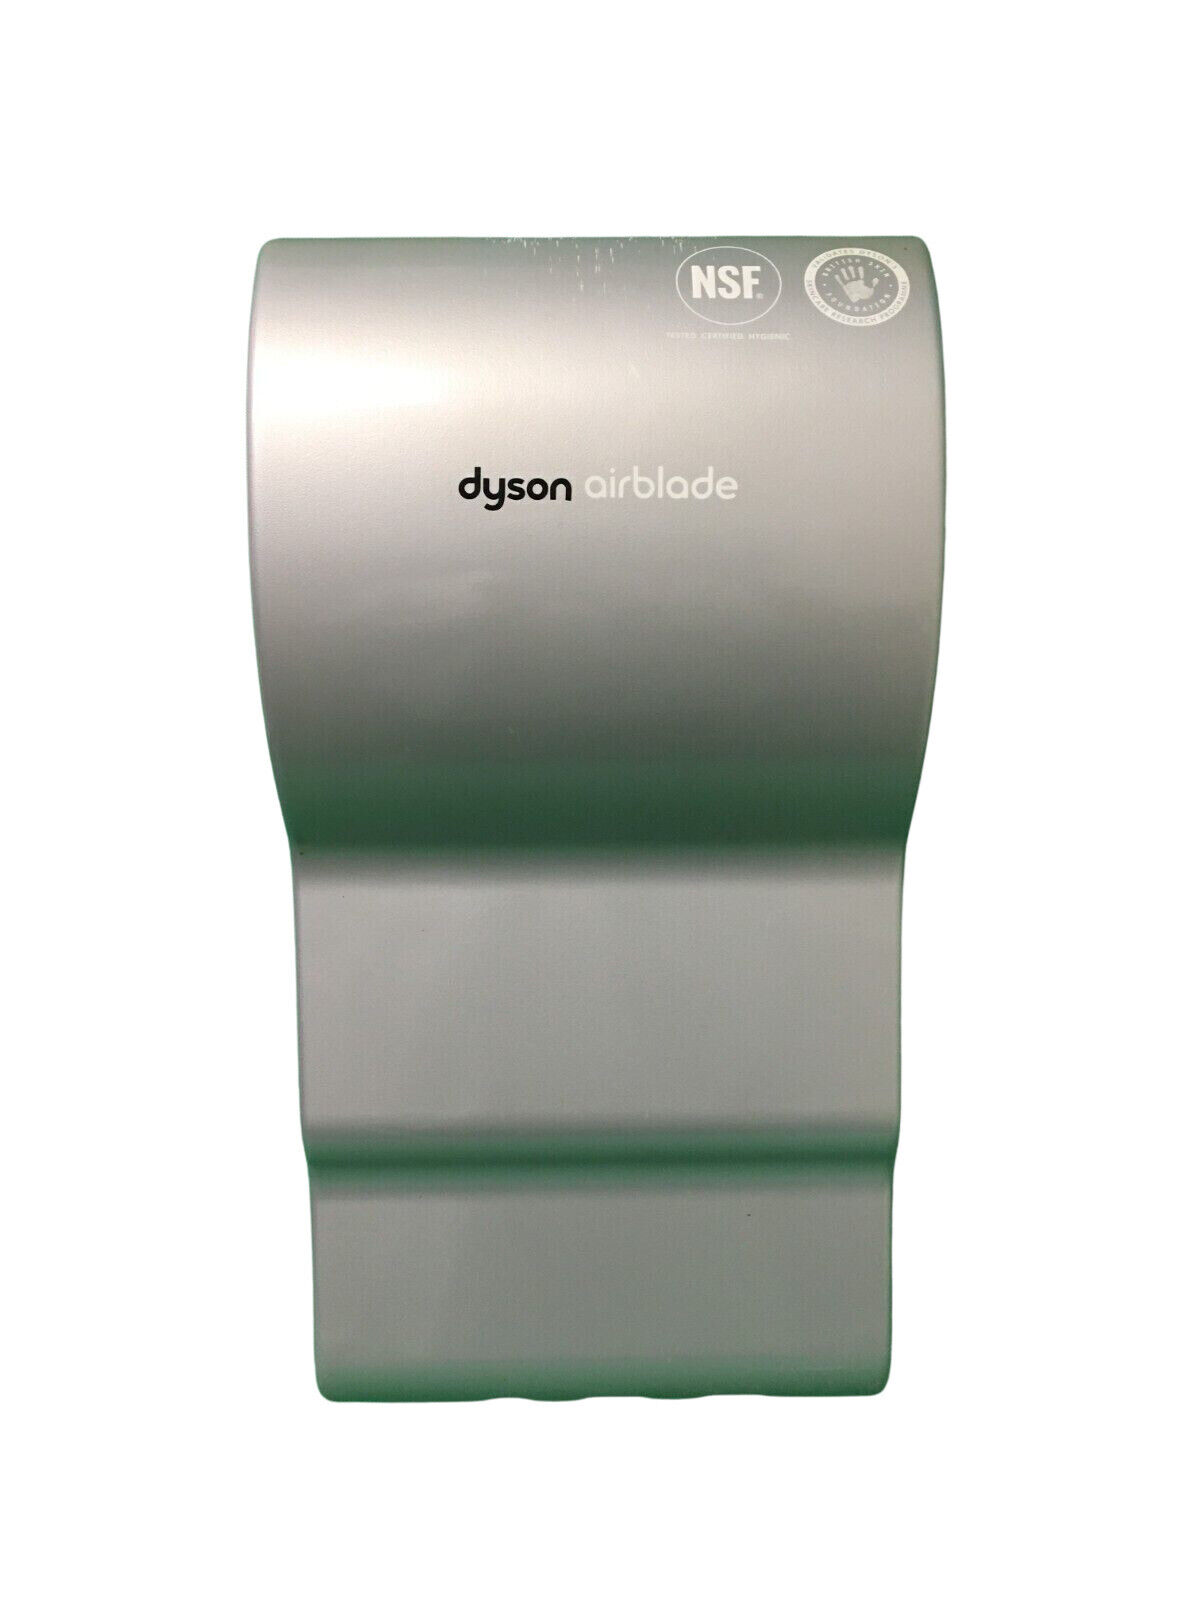 Dyson AB02 Cast Aluminum Hand Dryer - Silver